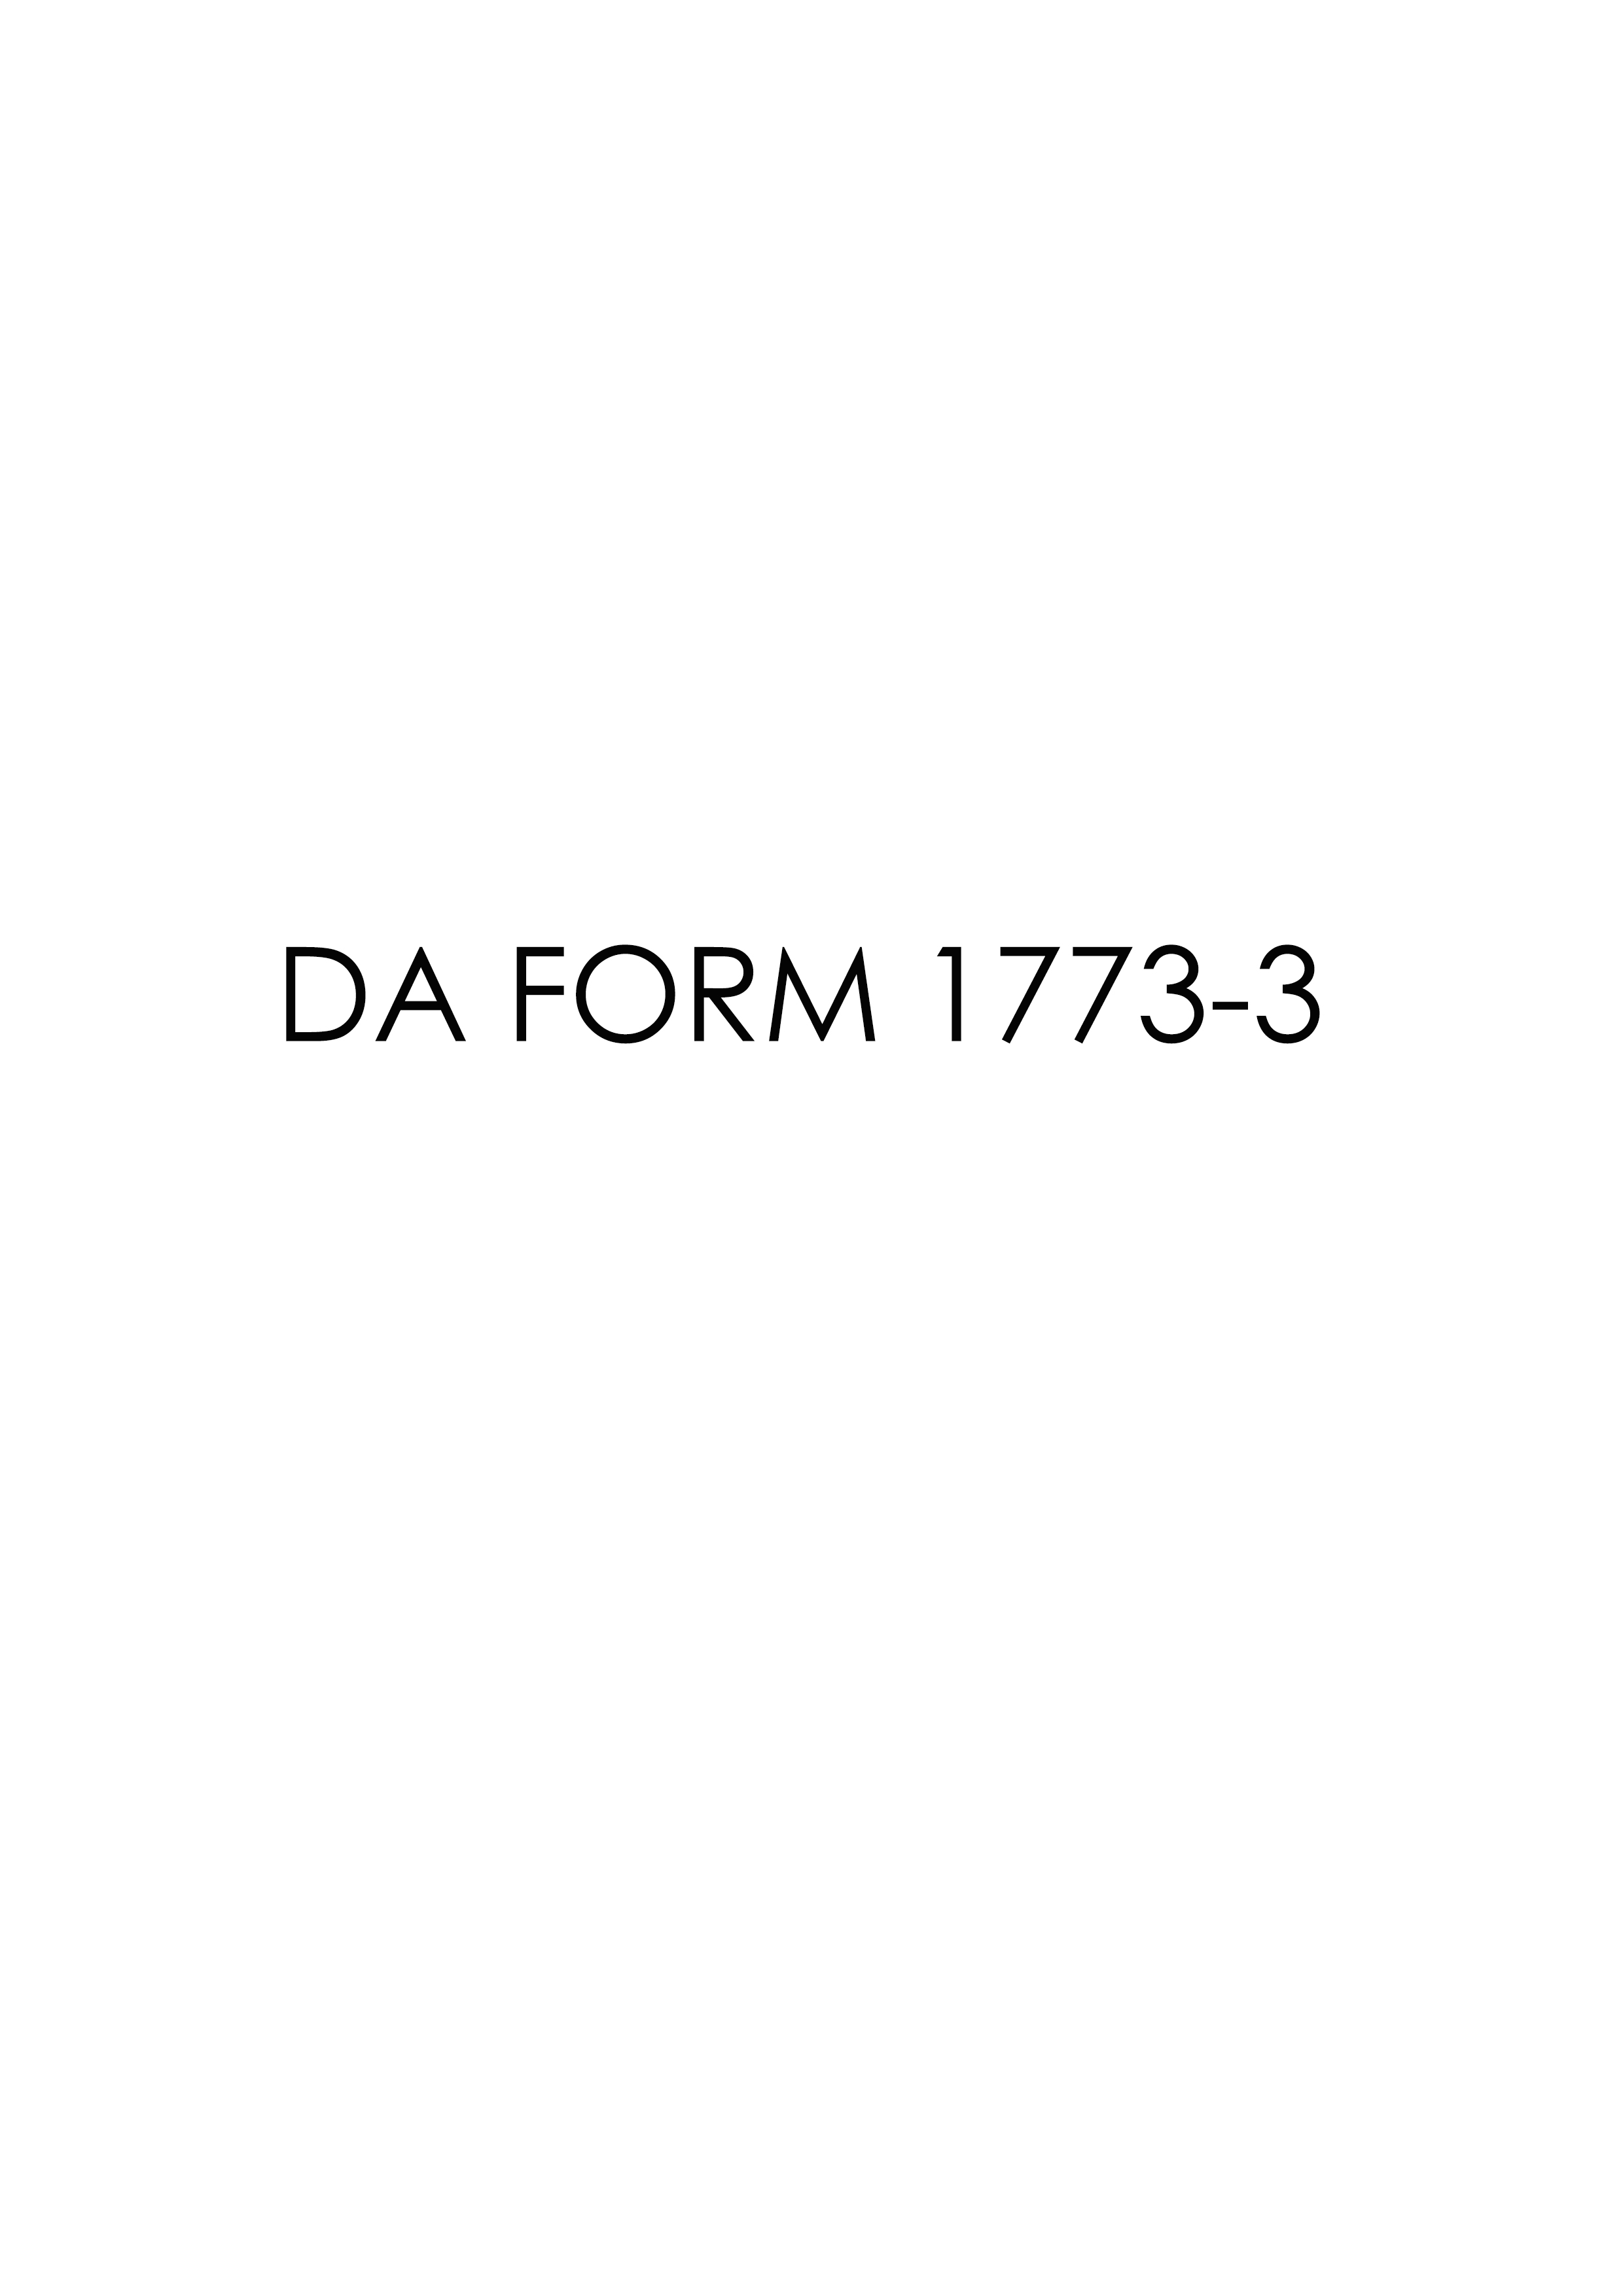 Download da 1773-3 Form